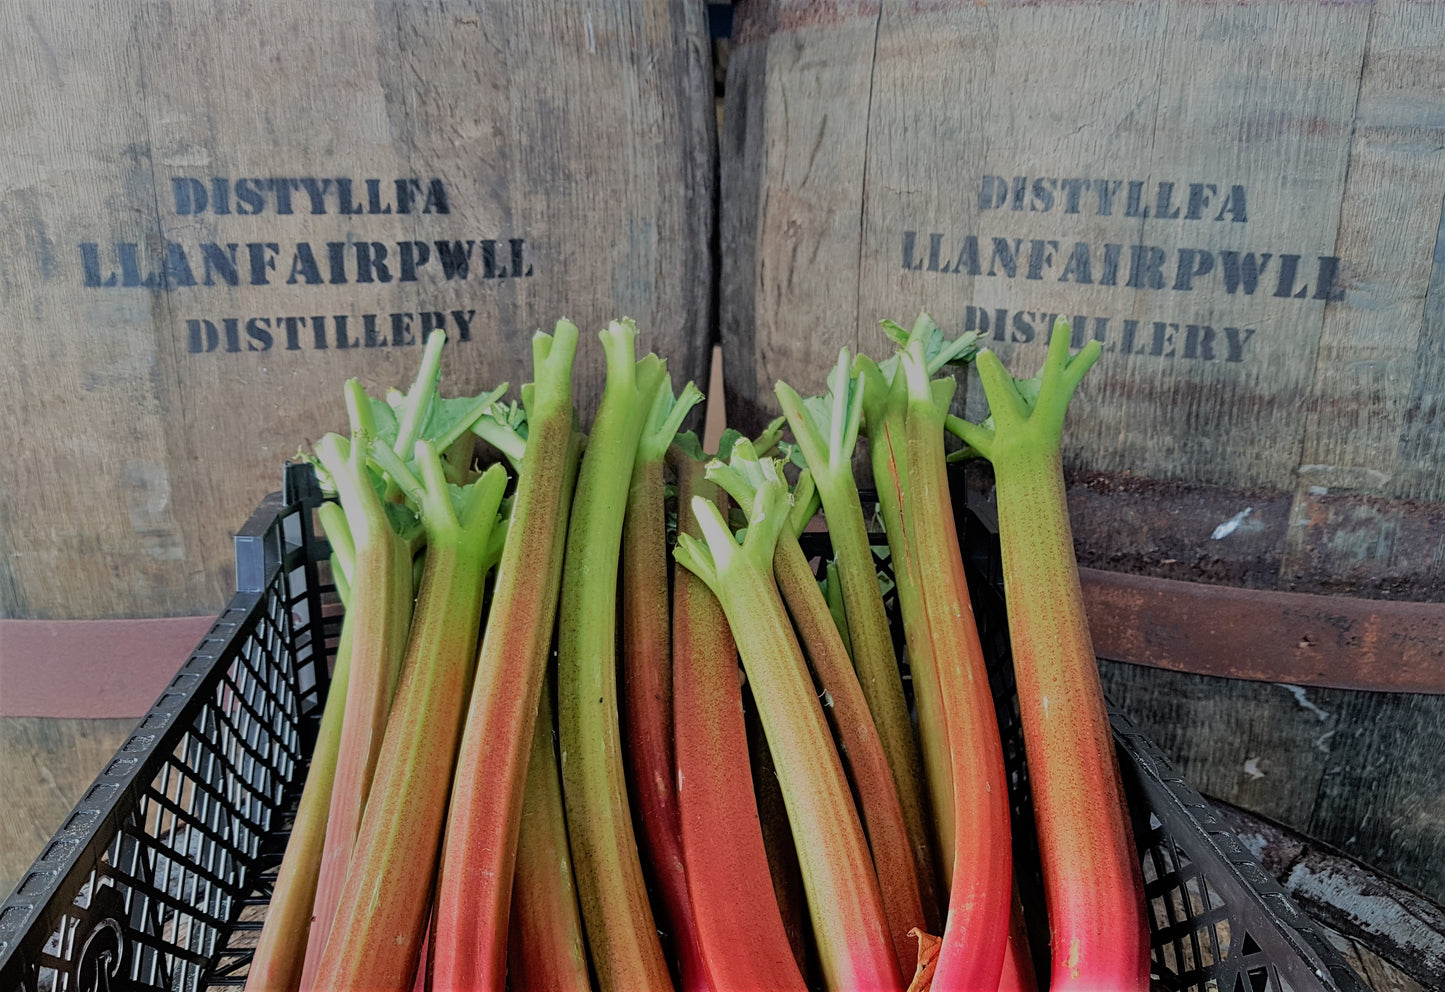 Llanfairpwll Distillery - Anglesey Rhubarb &amp; Vanilla Gin  Craft Anglesey Gin